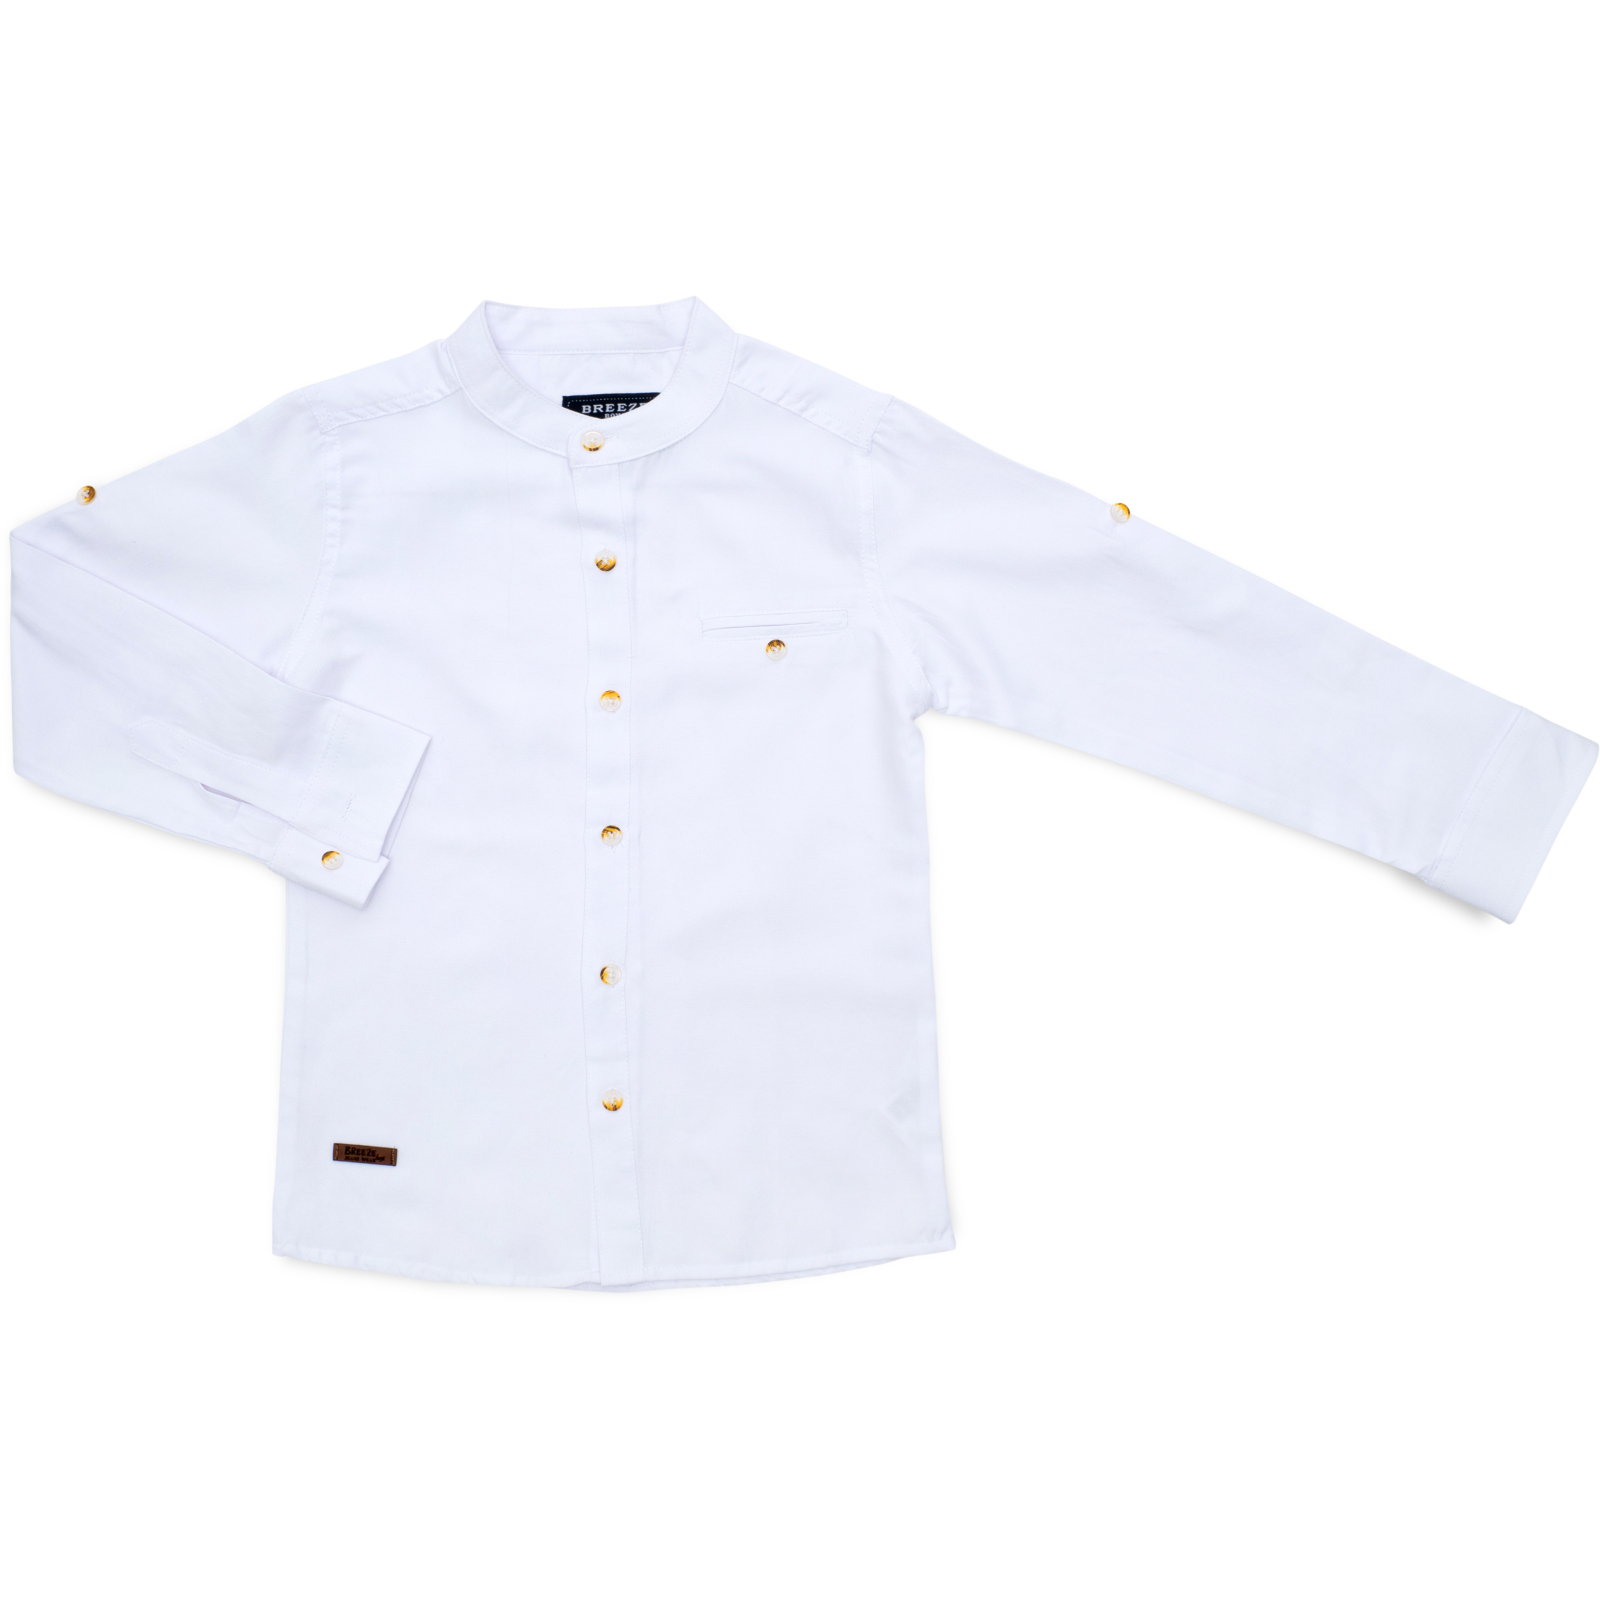 Рубашка Breeze для школы (G-457-140B-white)